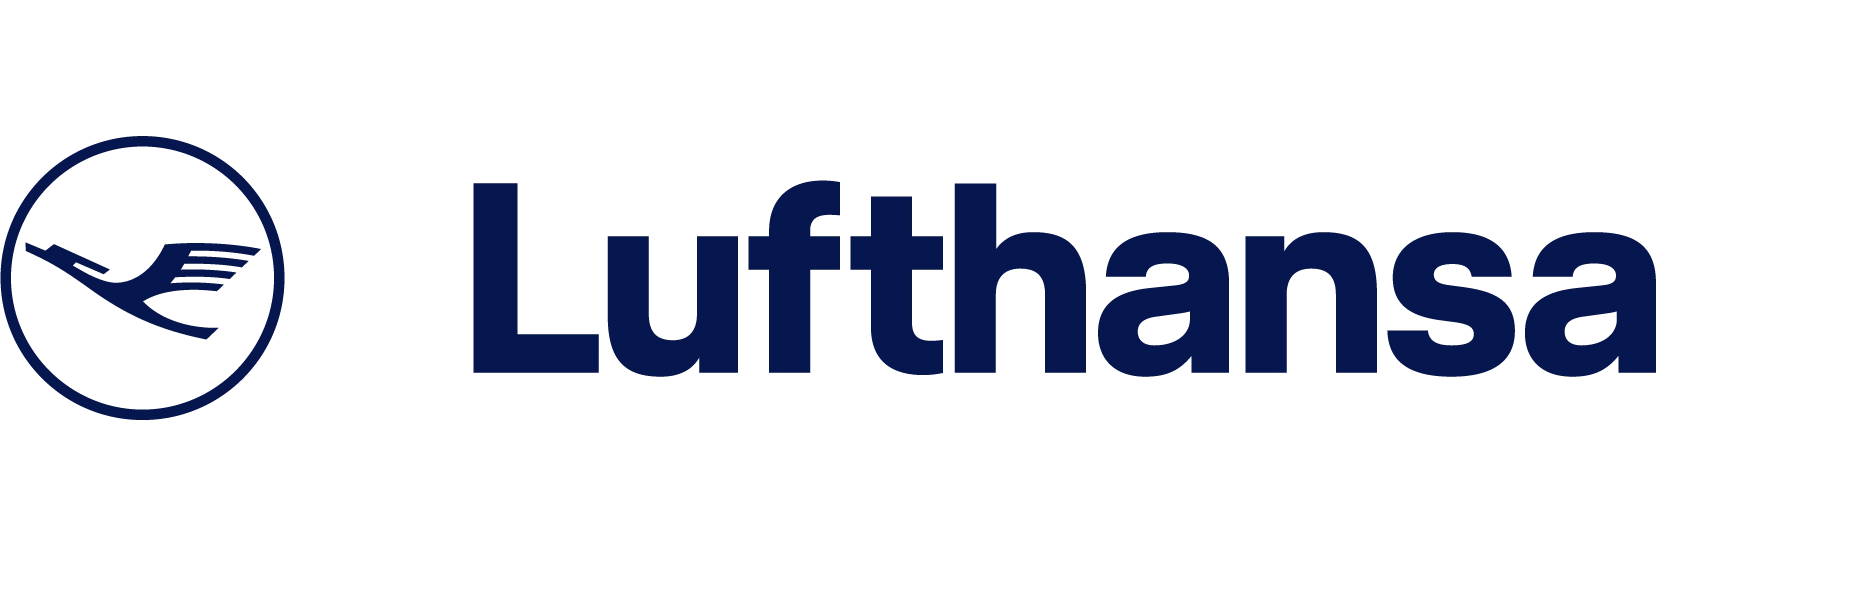 Lufthansa online aptitude tests